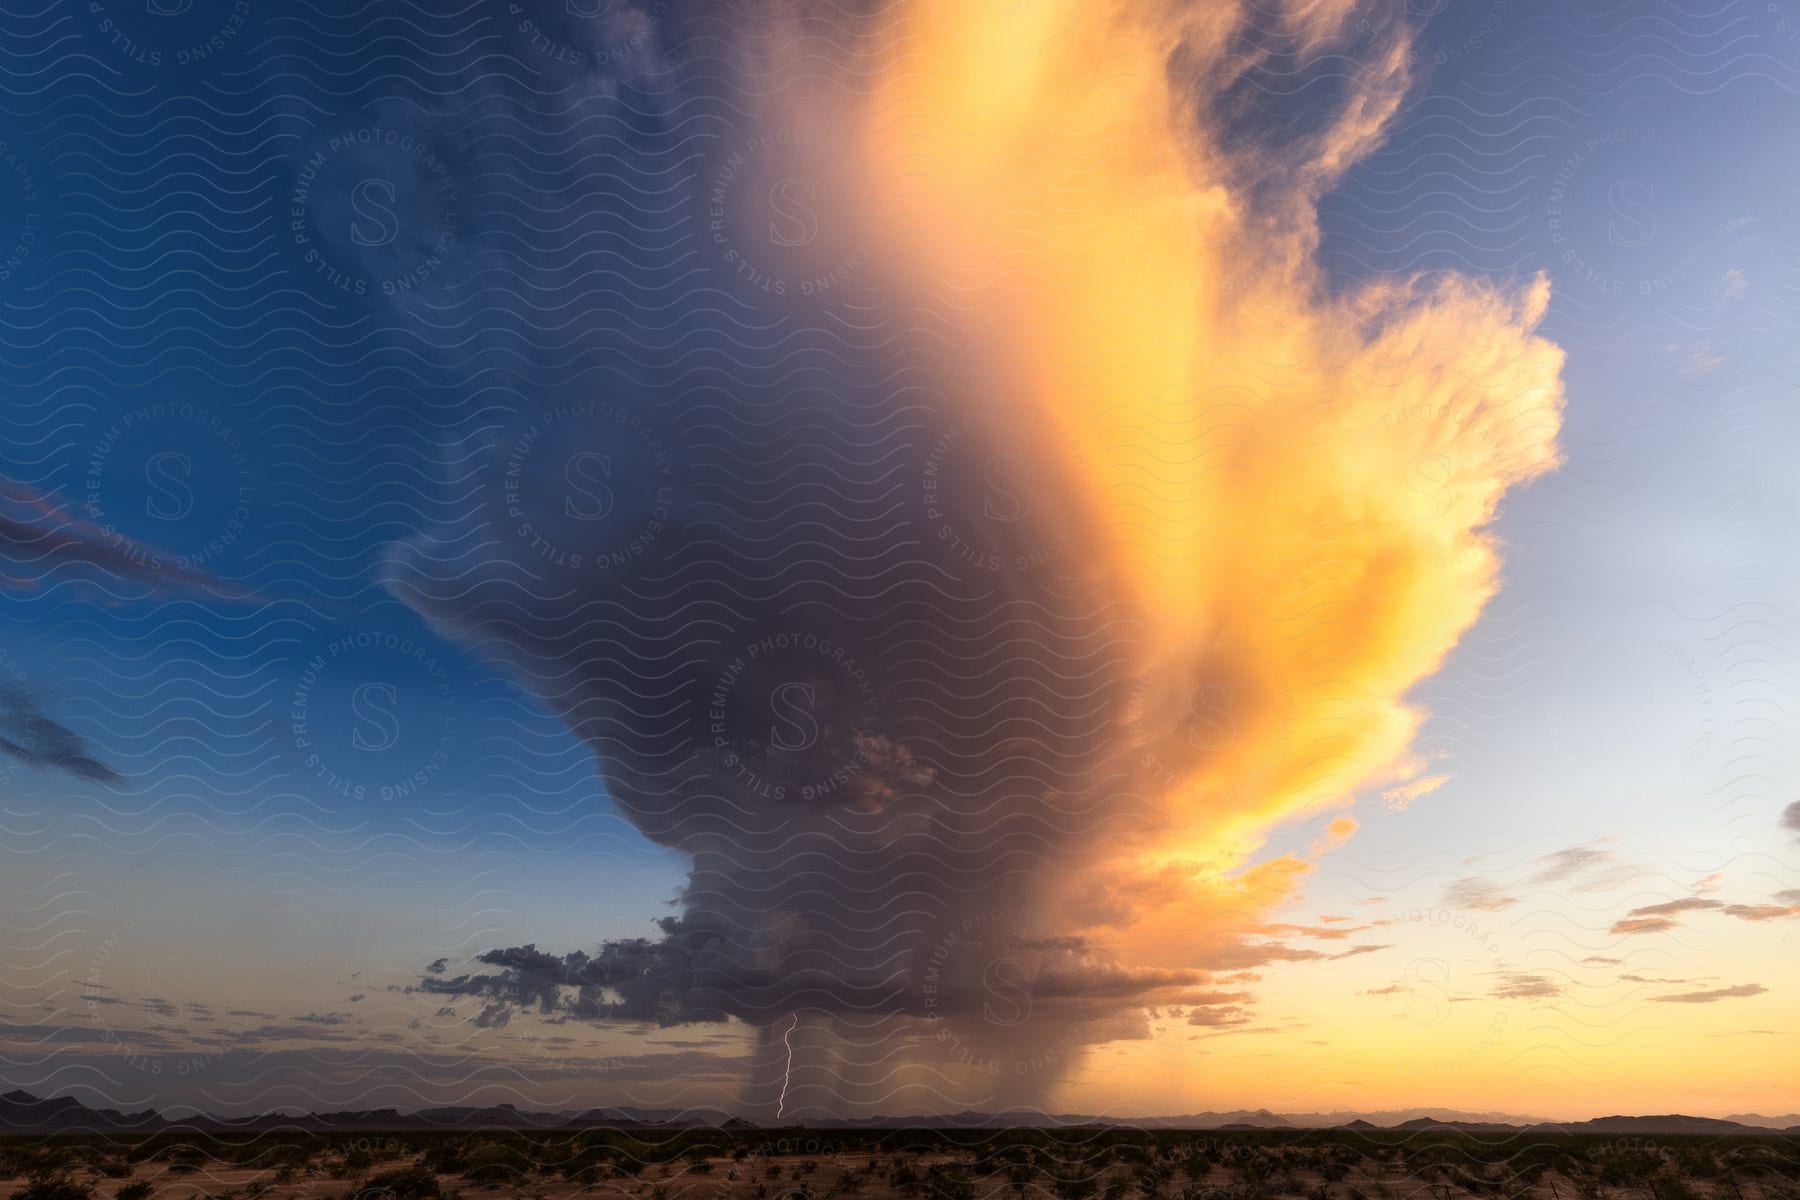 Supercell storm with lightning strikes over desert mountains on horizon